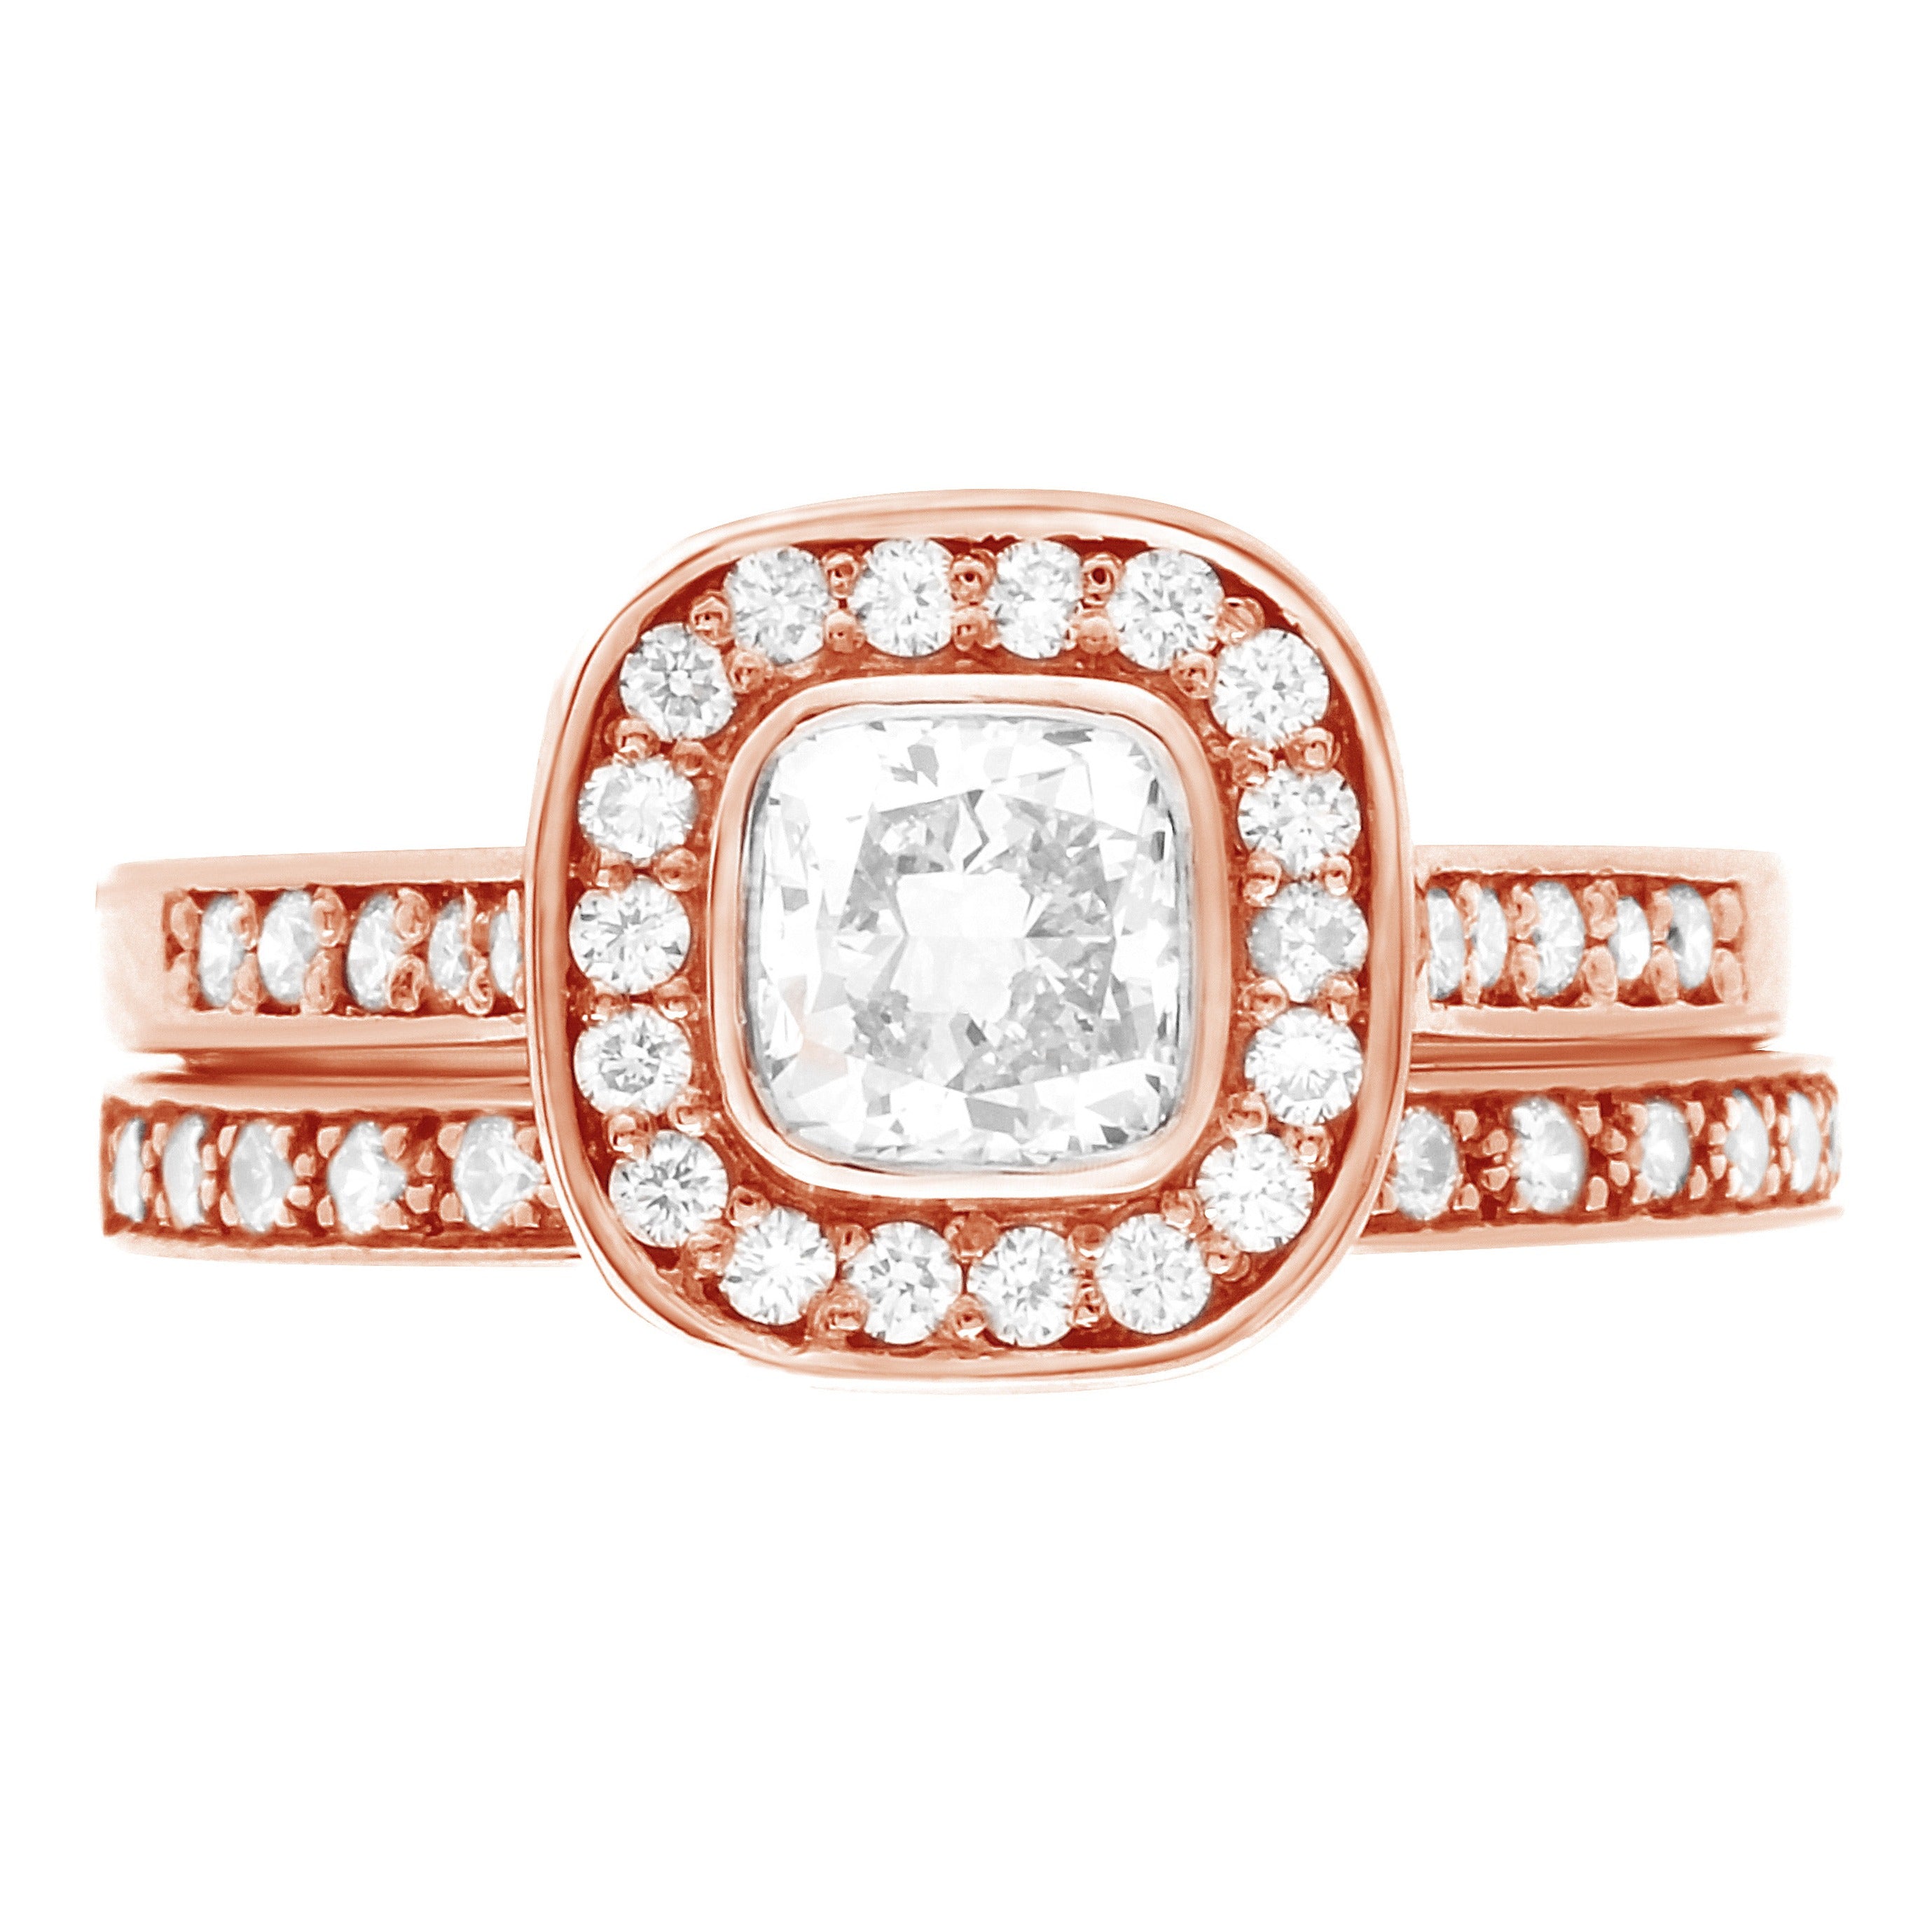 Cushion Cut Bezel Diamond Ring in rose gold with matching diamond set wedding ring